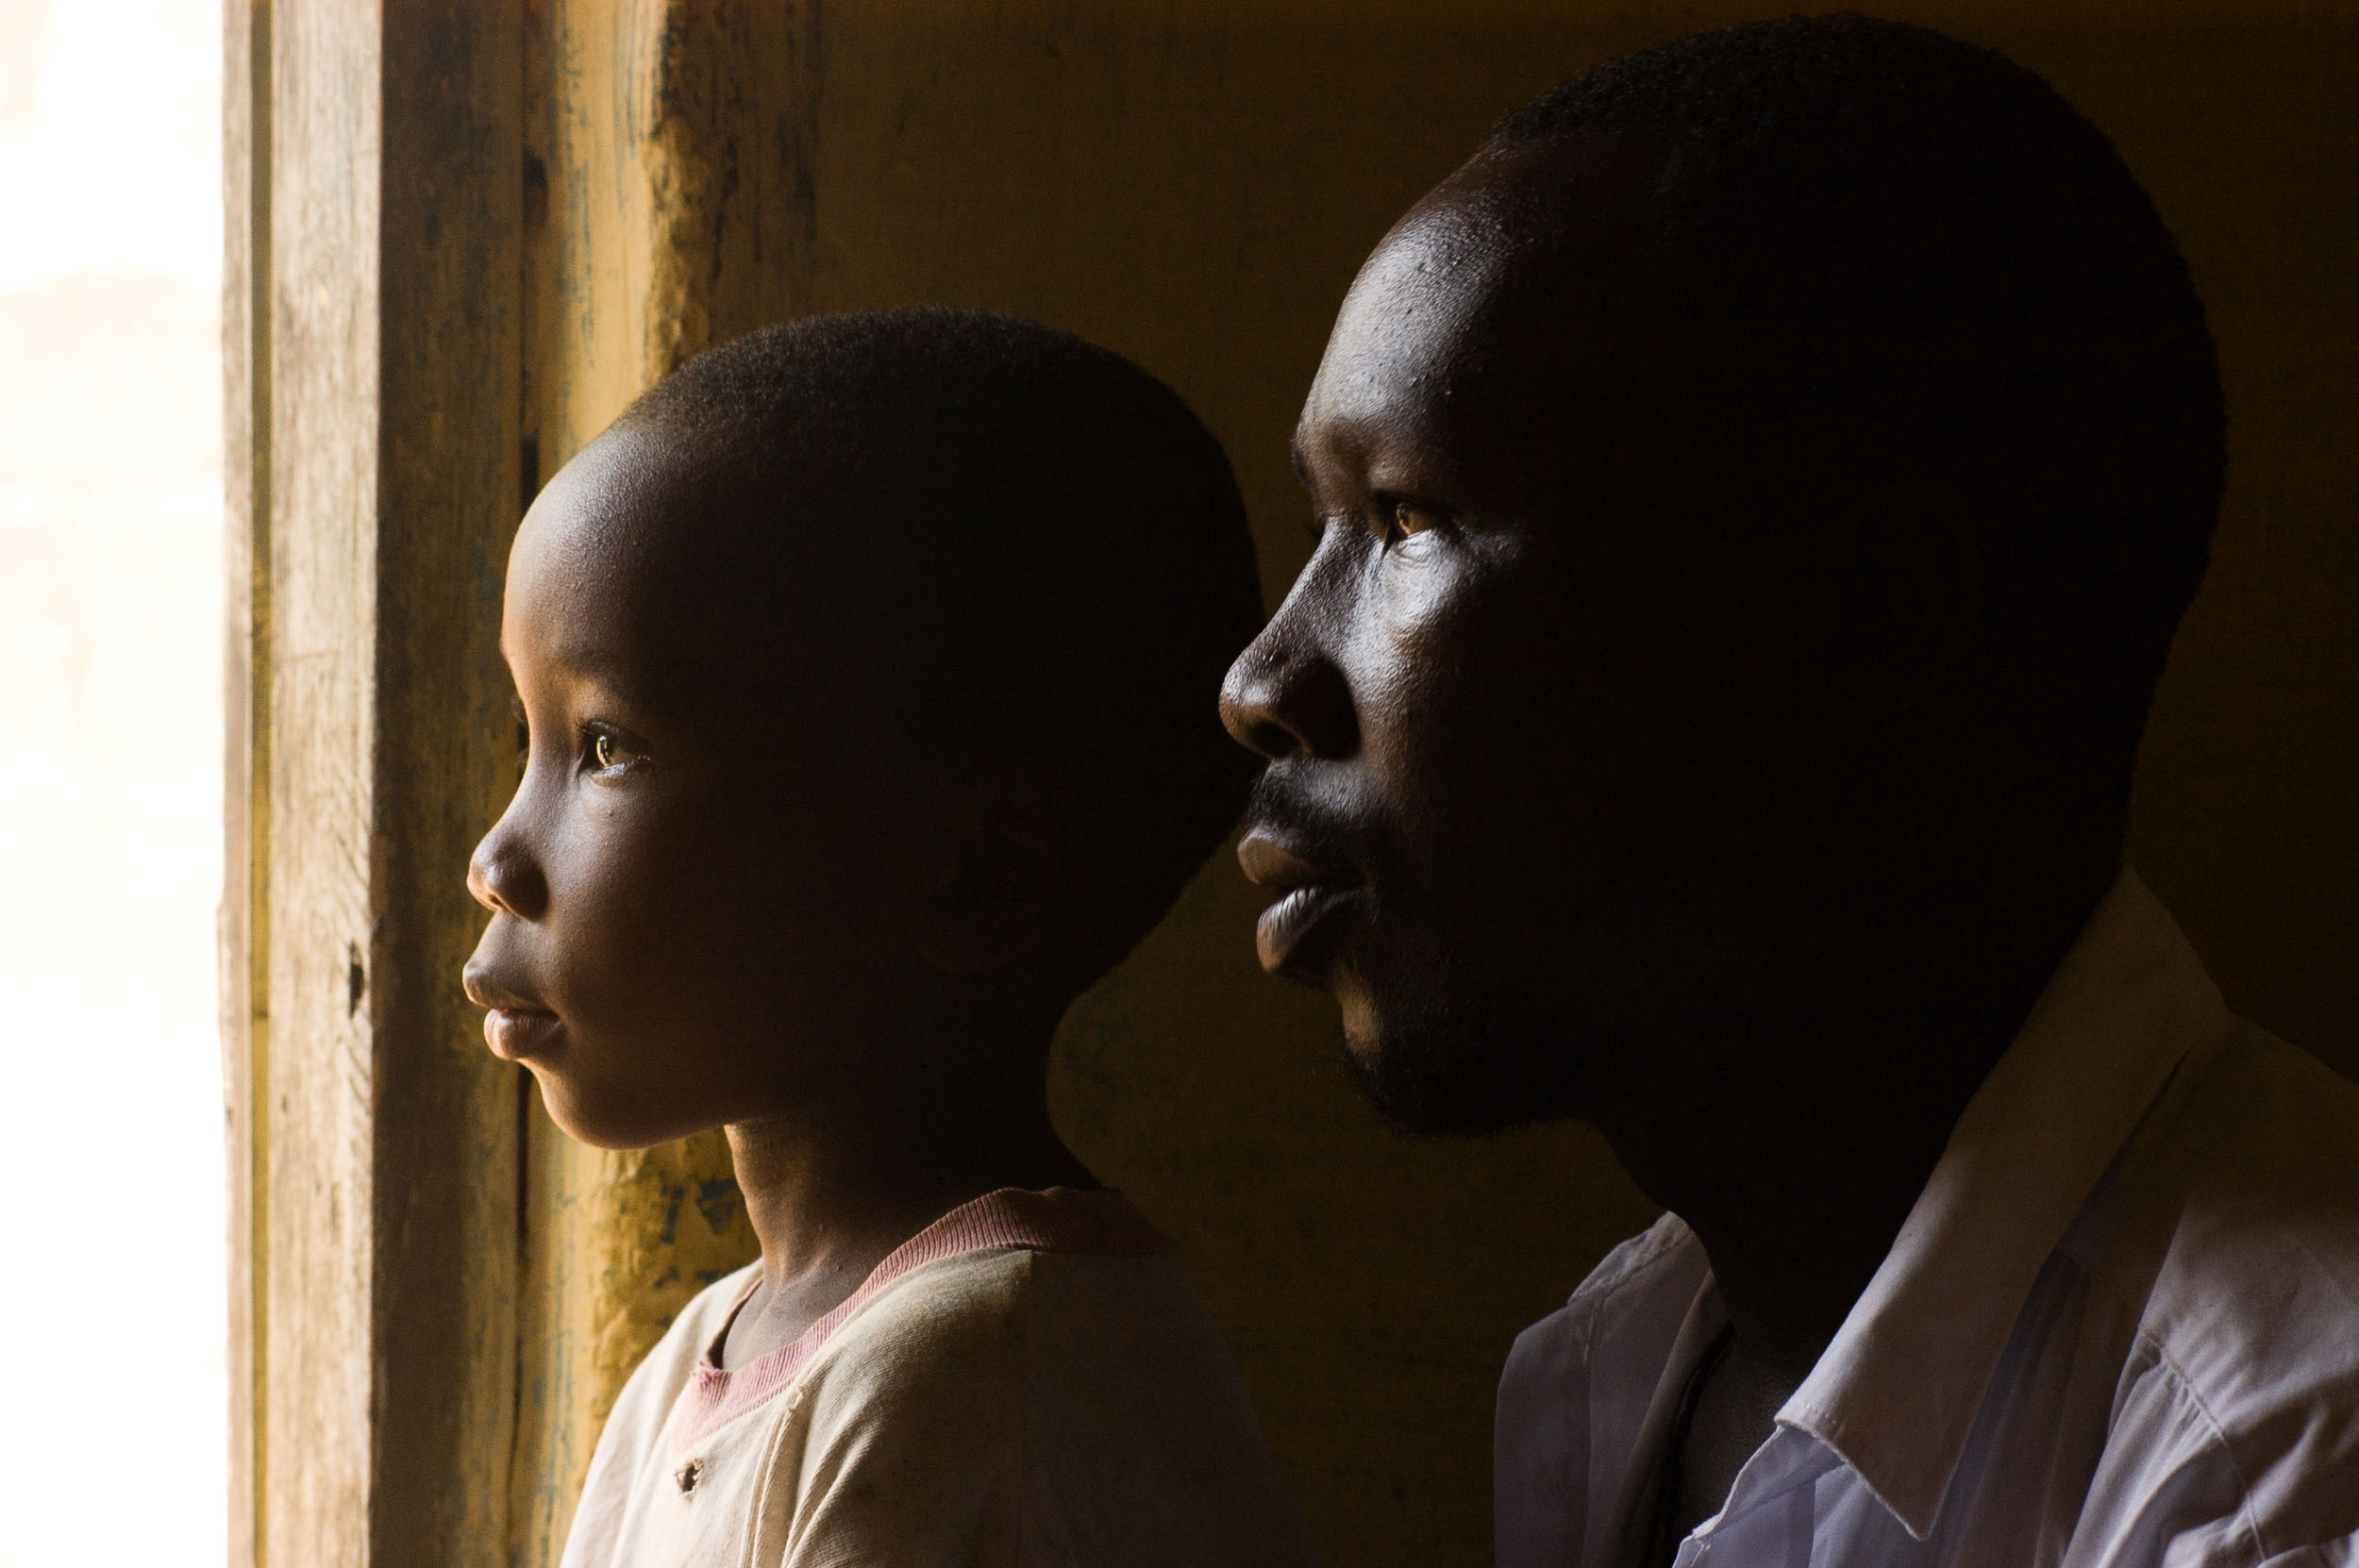  Kora Musician Pa BoBo and his Son, Gambia, Africa 